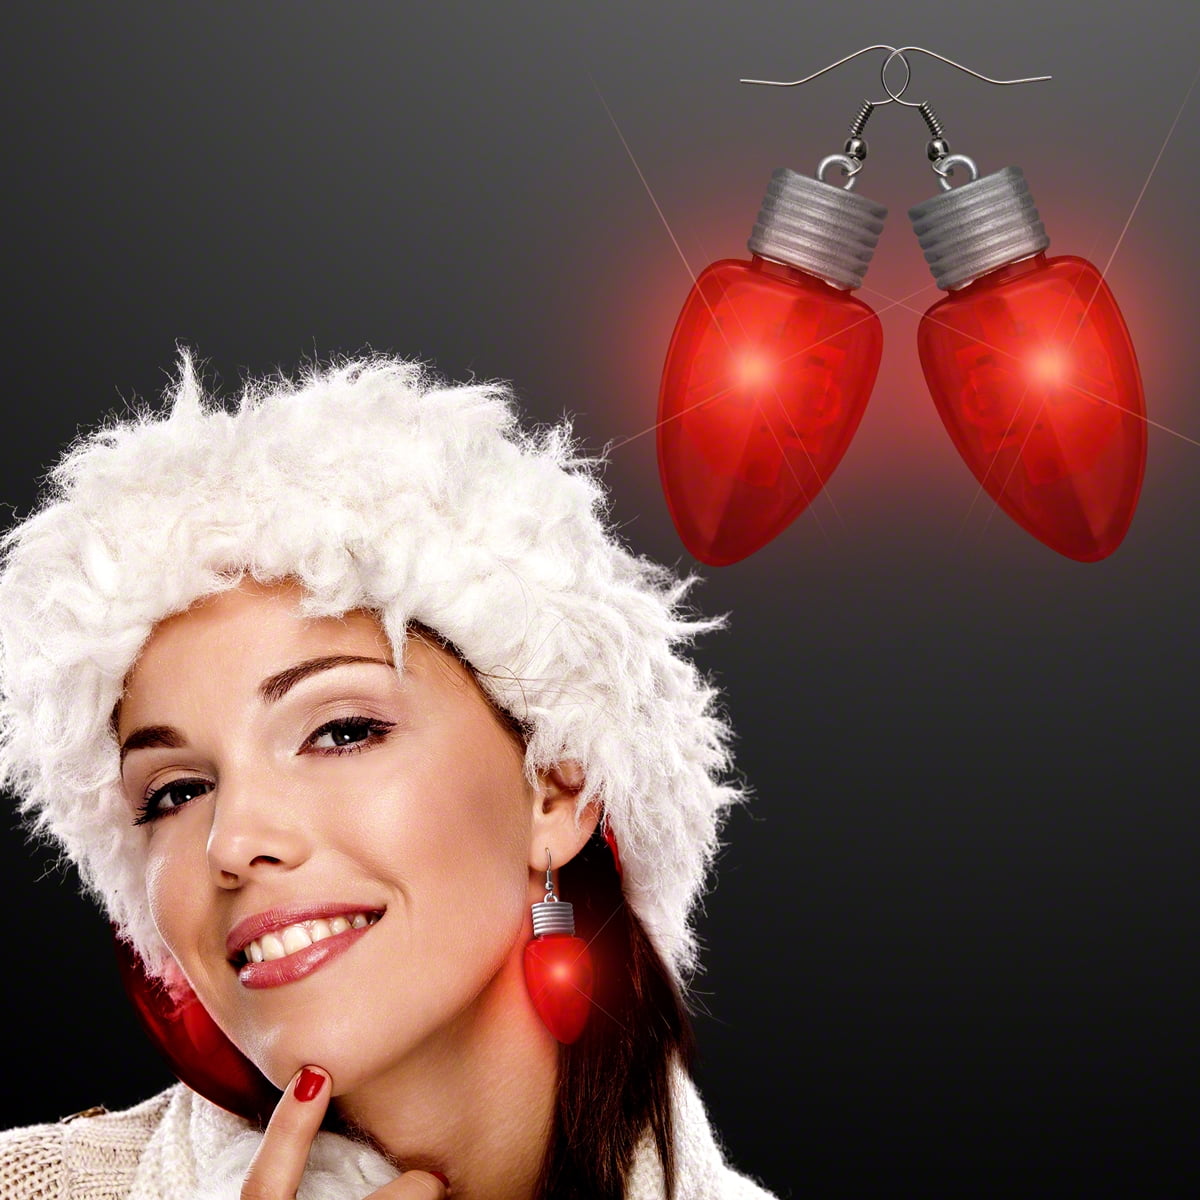 Flashingblinkylights Red Flashing Led Christmas Bulb Light Up Earrings